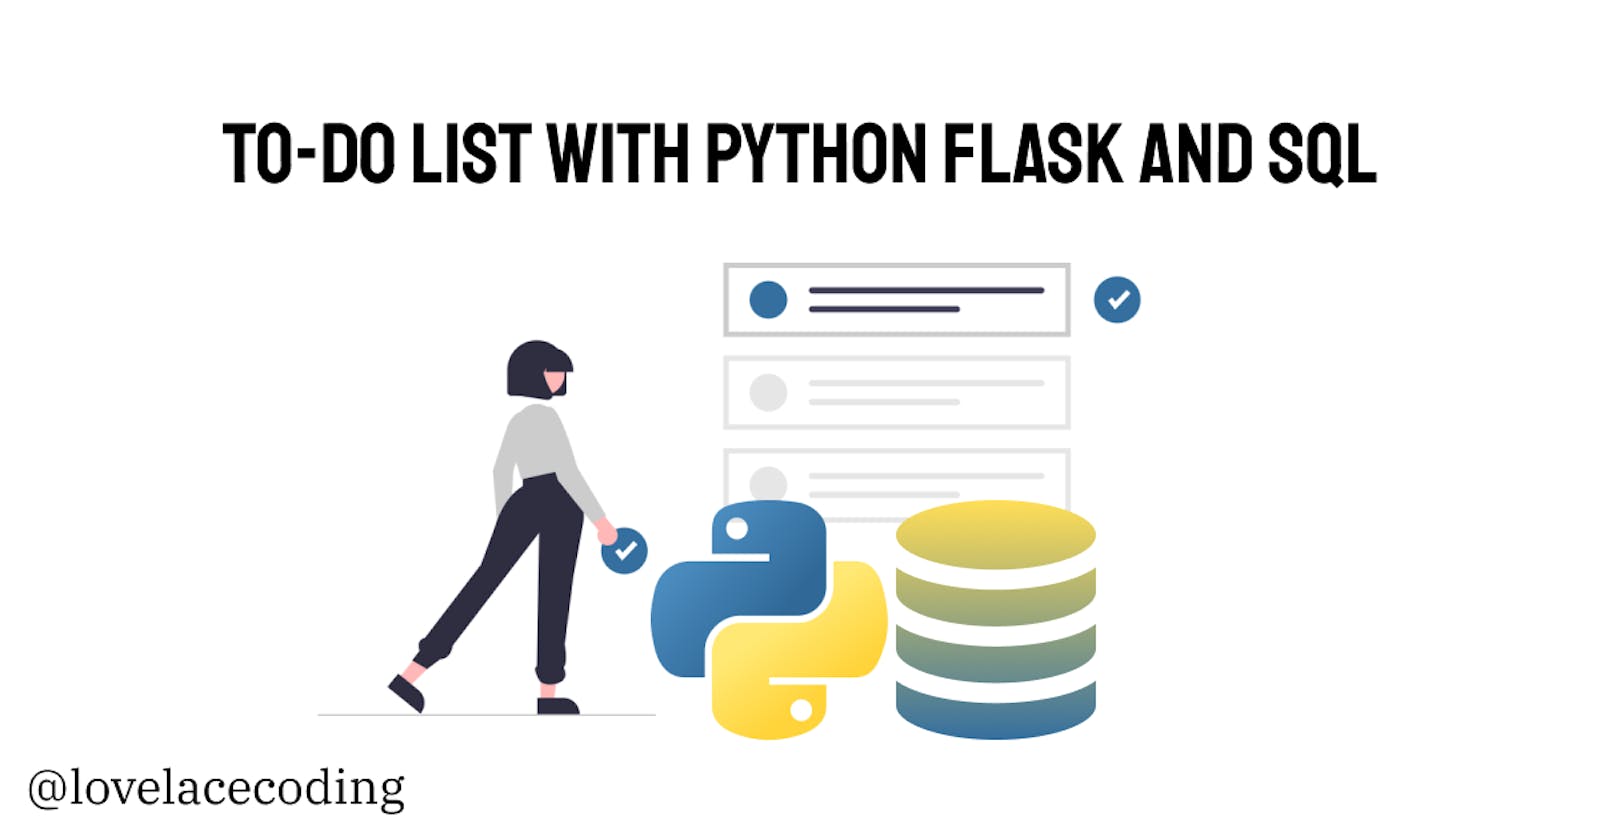 Build a To-Do List App Using Python Flask, Jinja2, and SQL